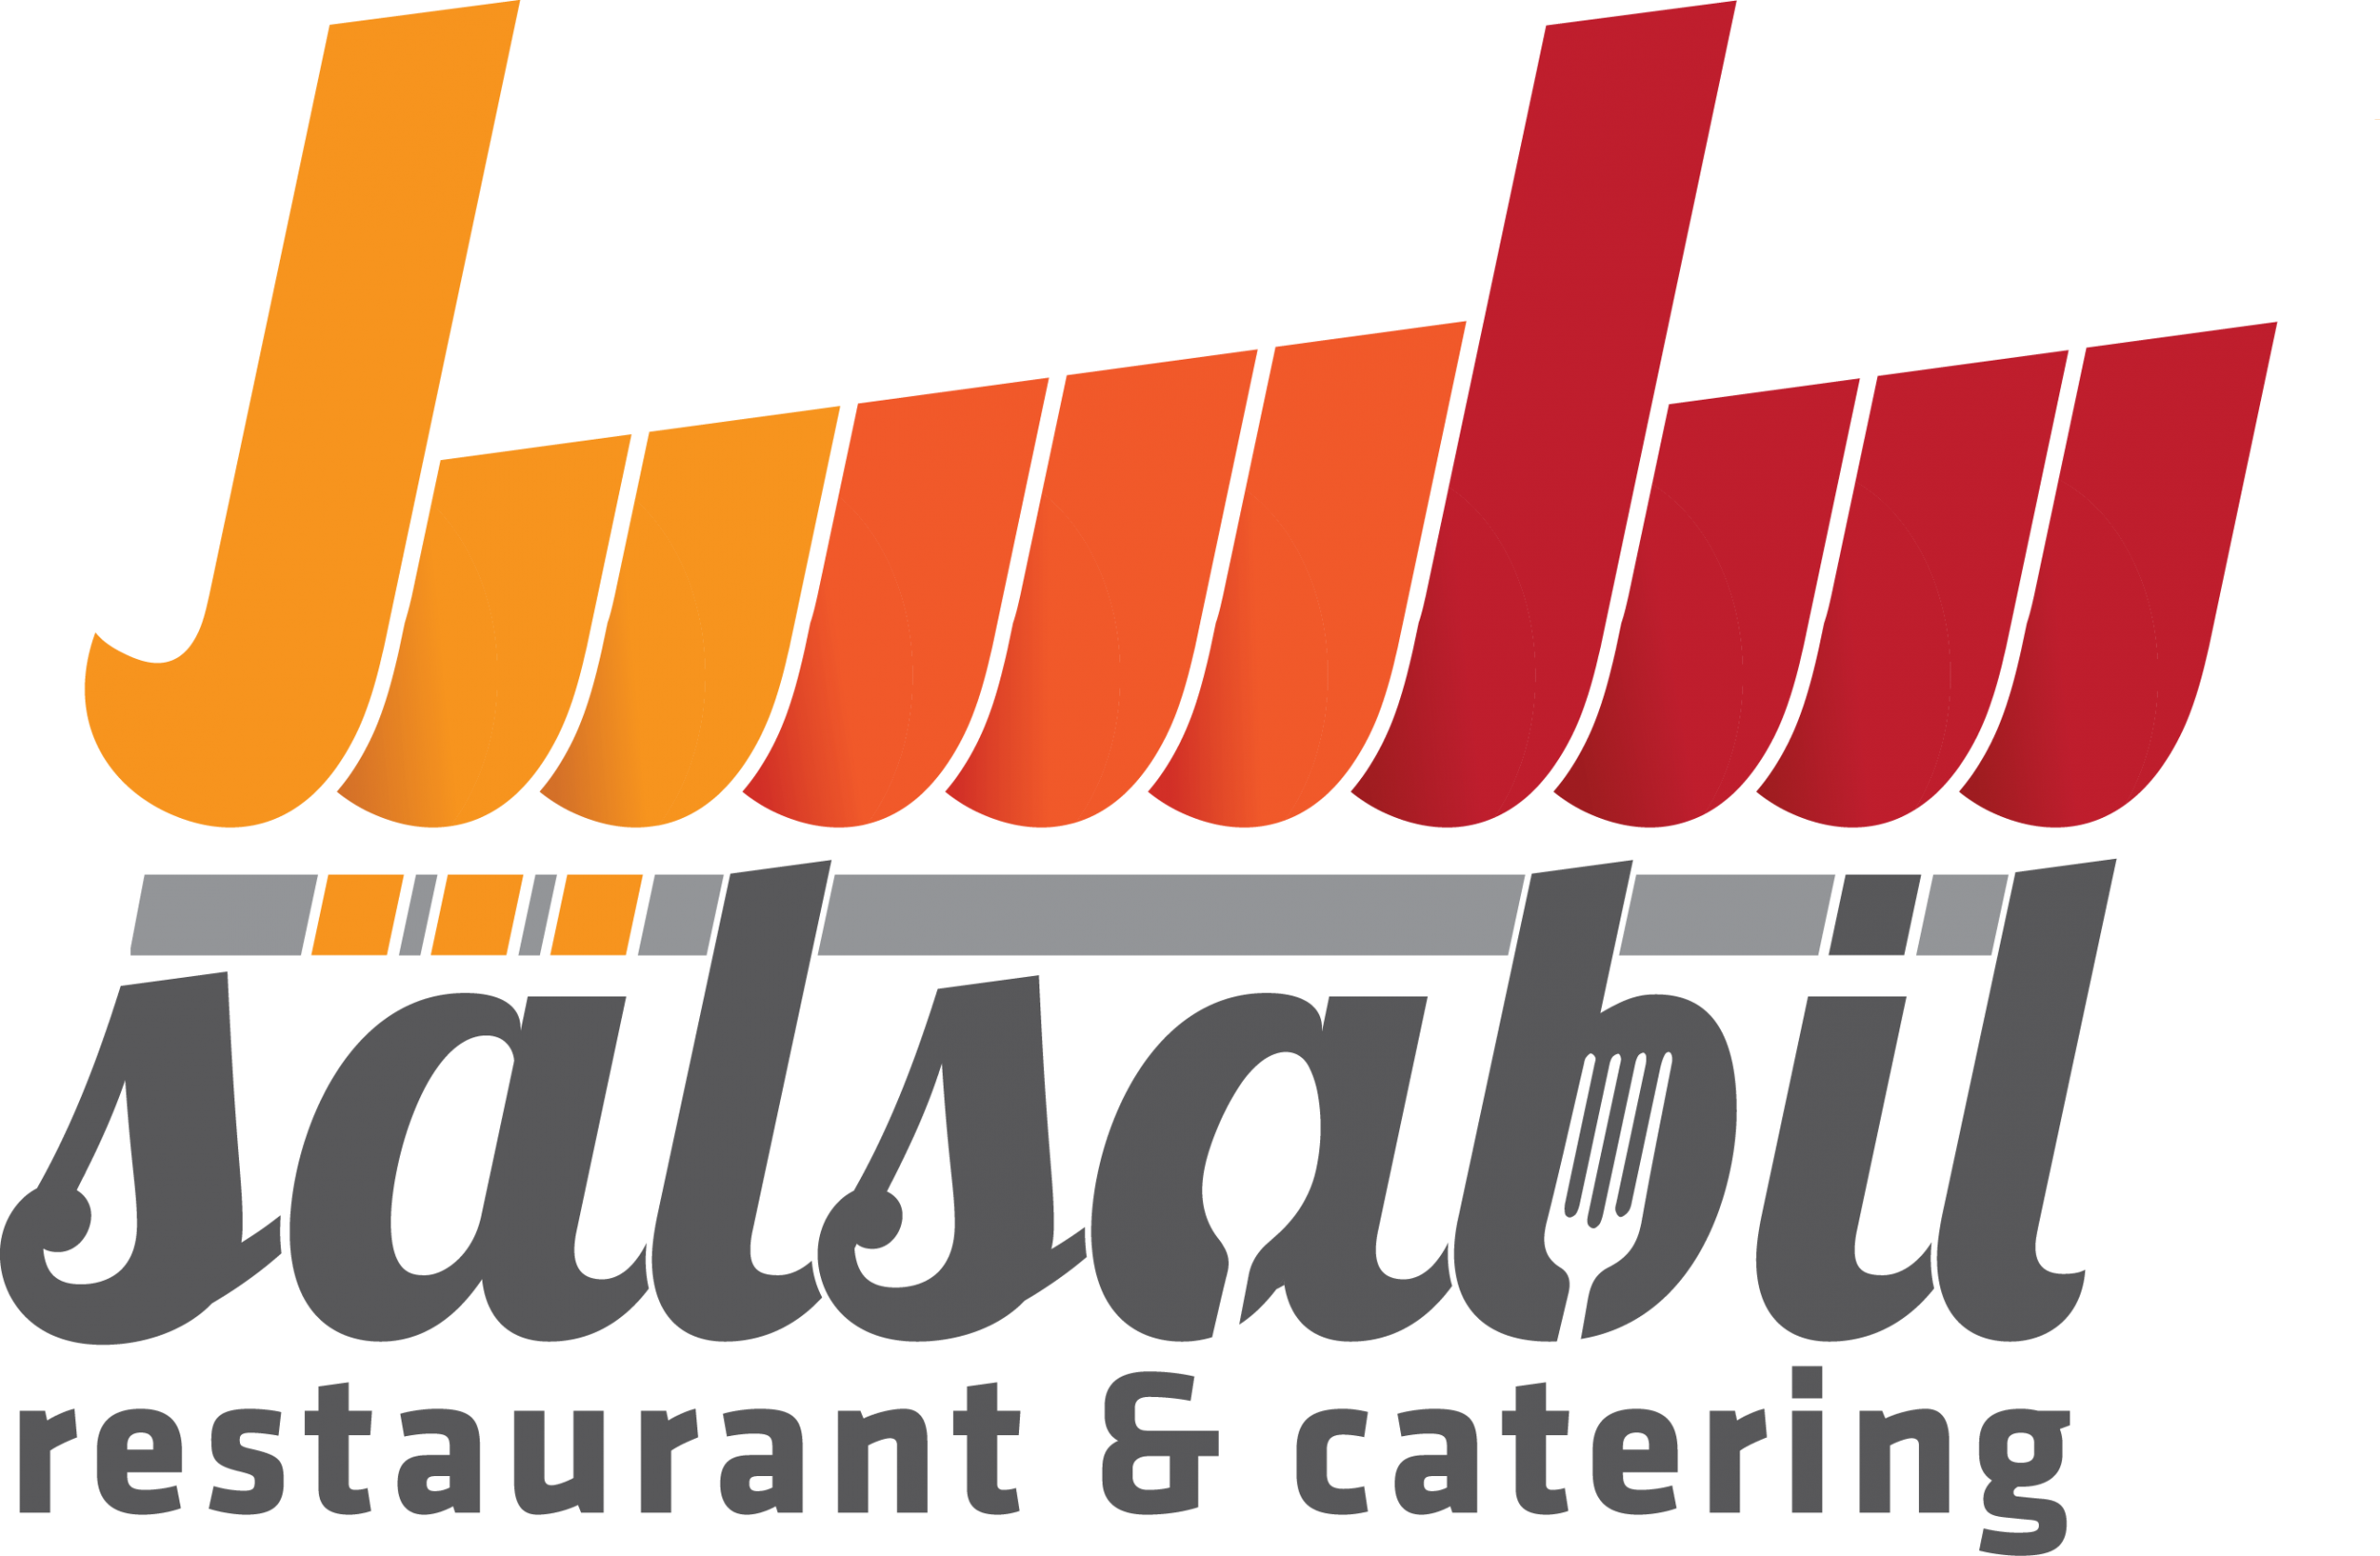 Restoran Salsabil